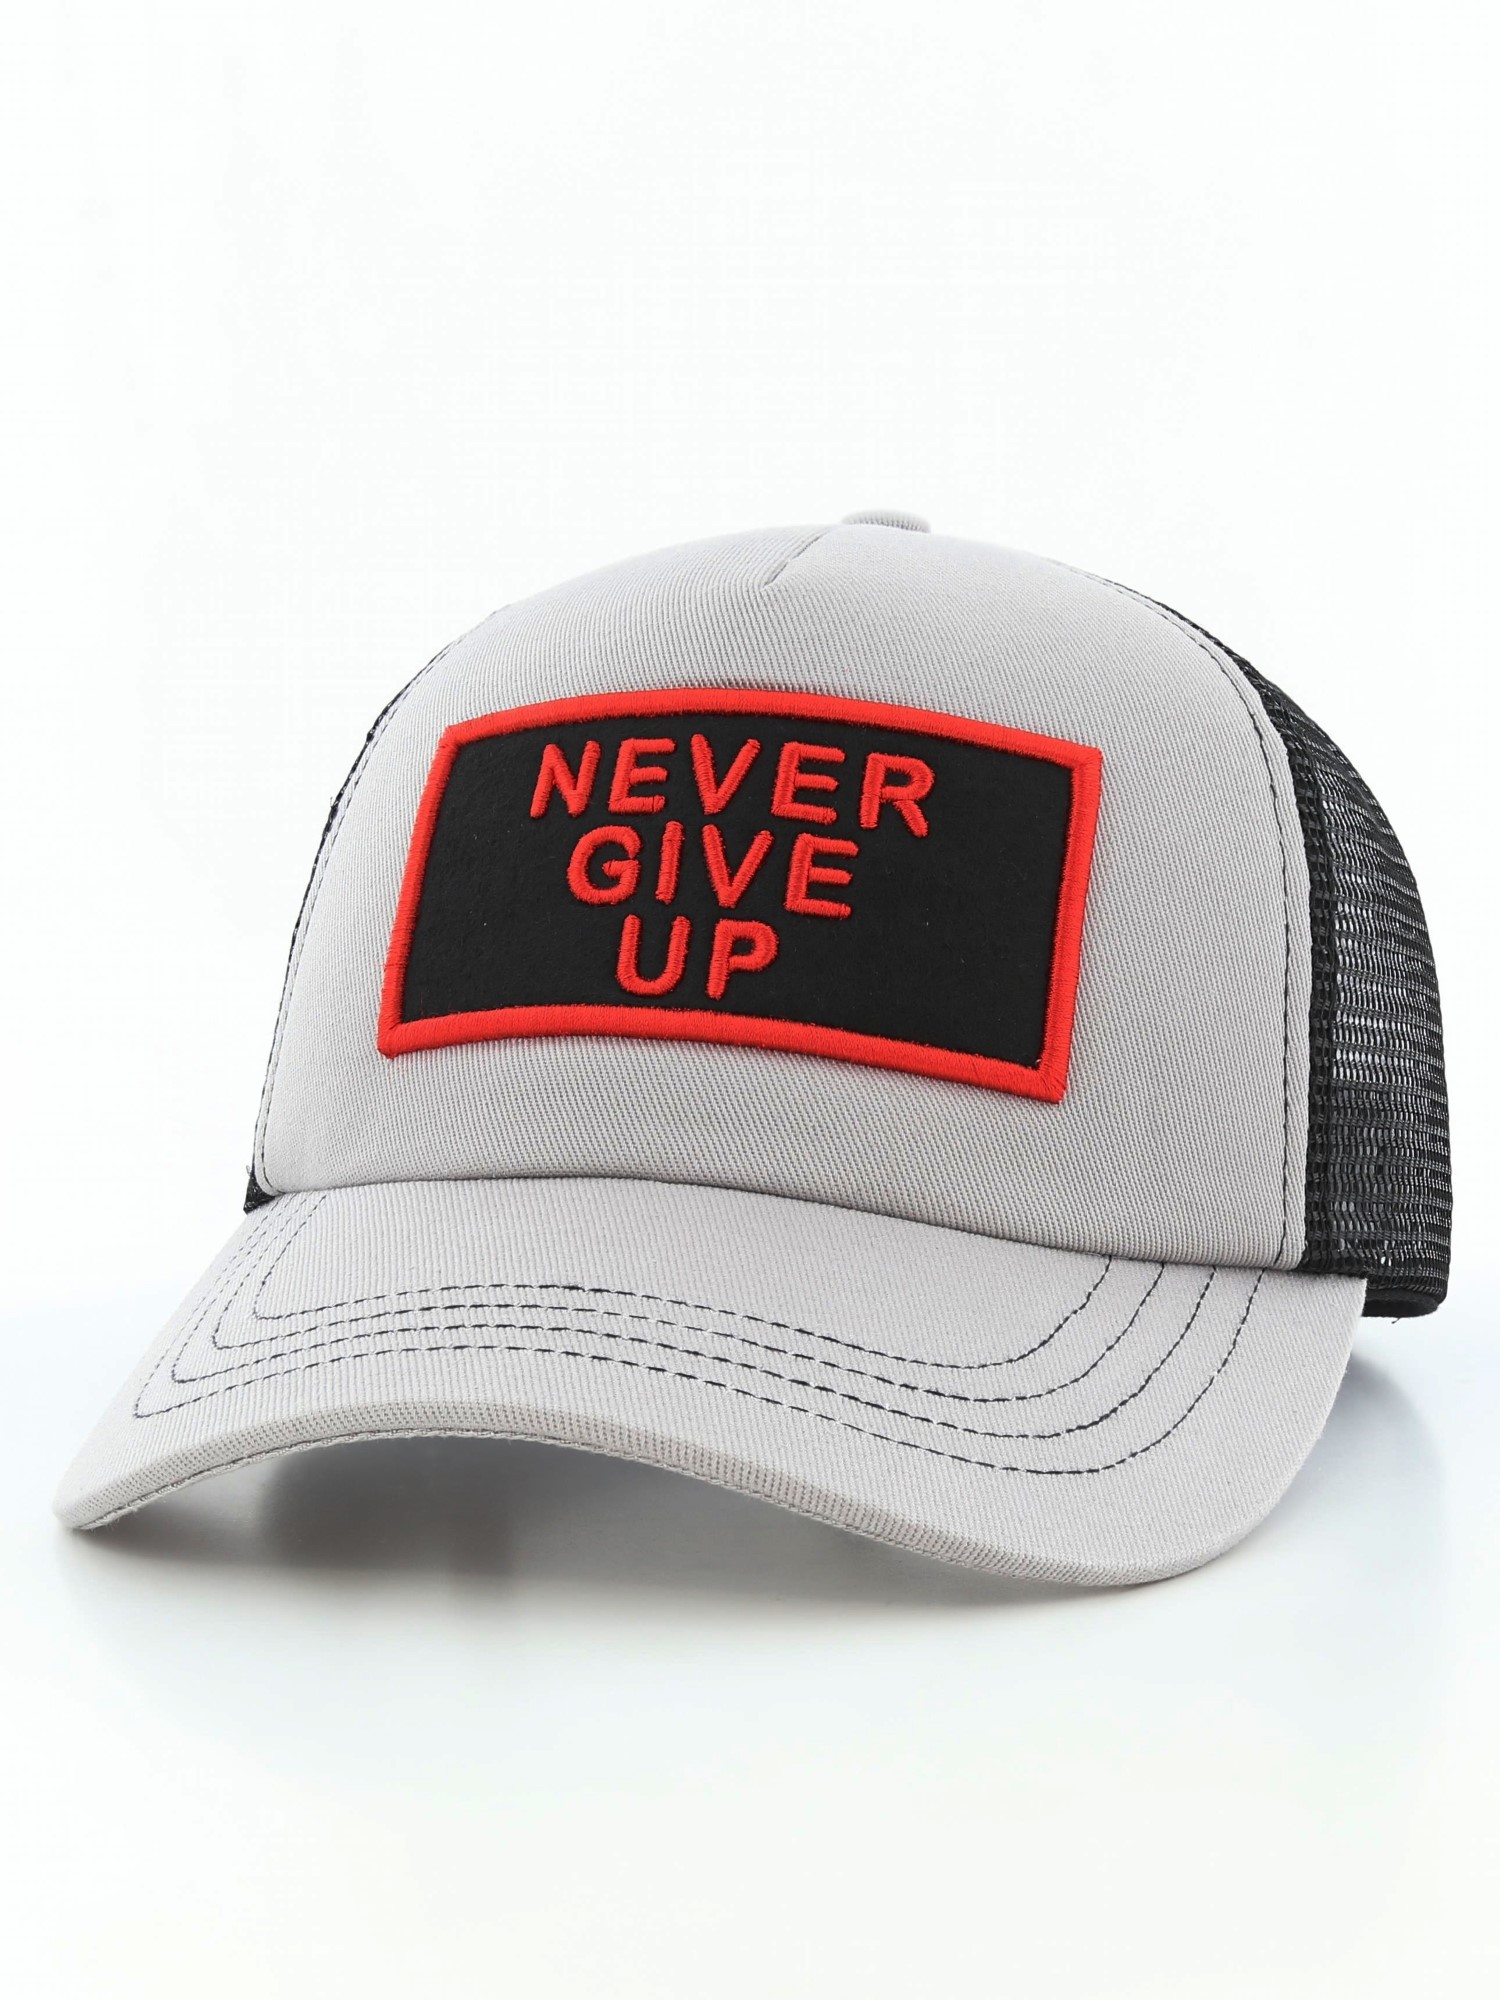 B180 Never Give Up Grey/Black Trucker Cap